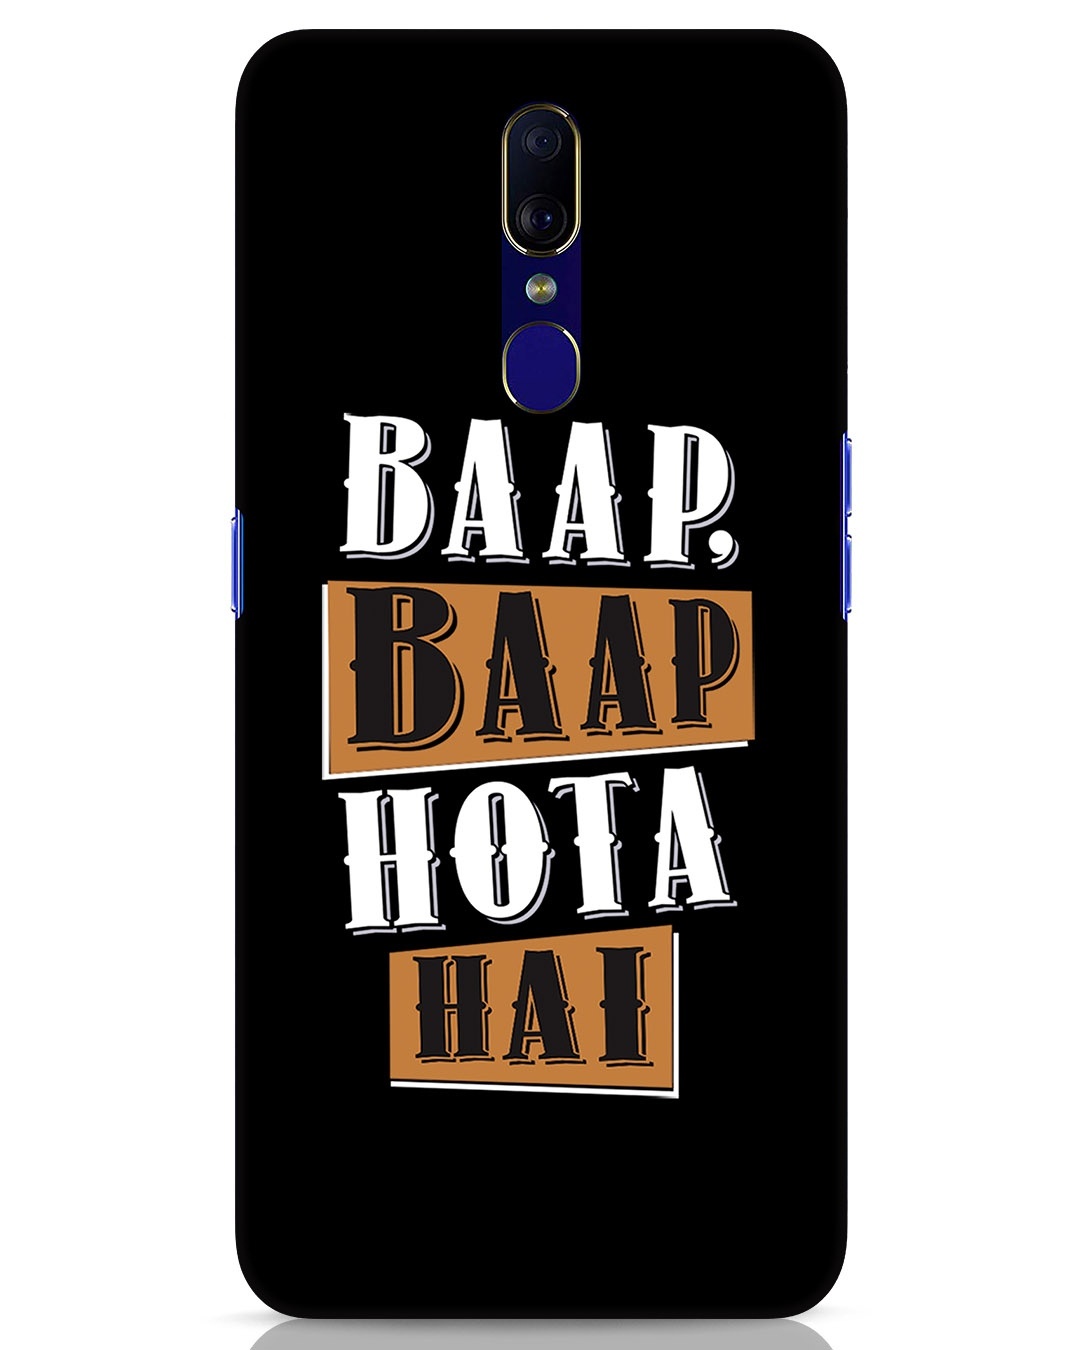 Buy Baap Baap Hota Hai Oppo F11 Mobile Cover Online in India at Bewakoof